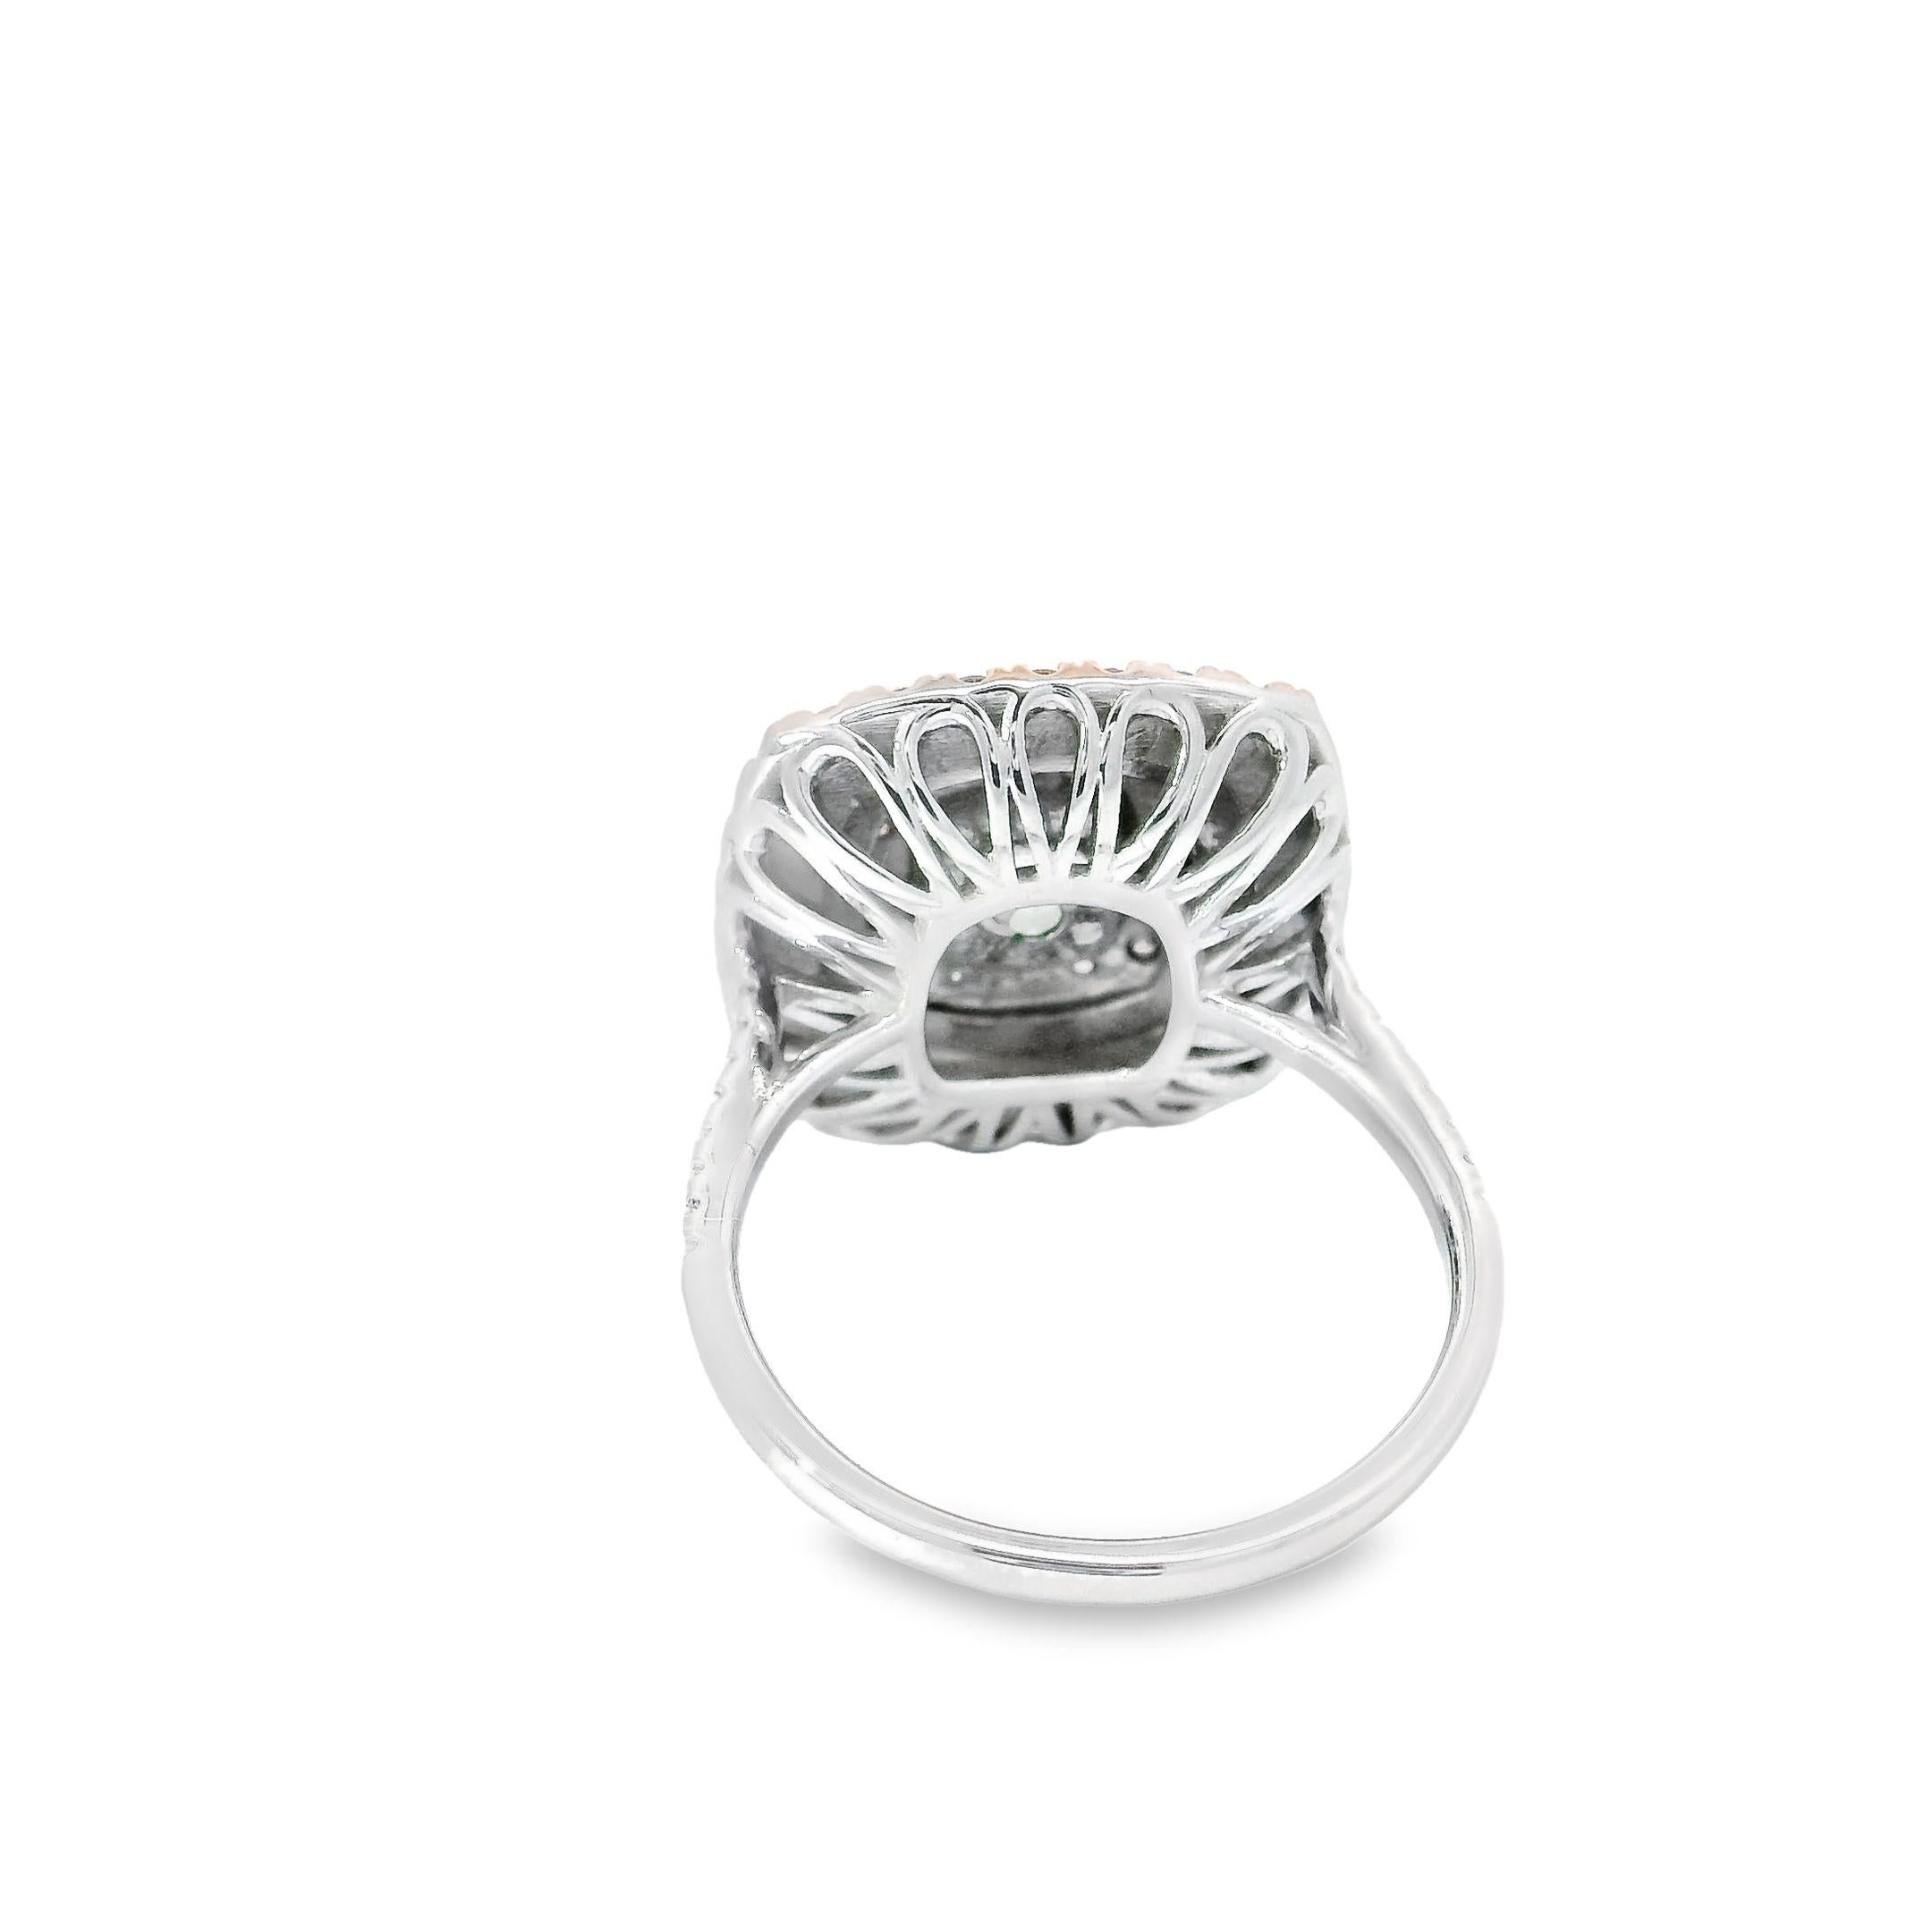 1.51 Carat Fancy Green Diamond Ring VS Clarity AGL Certified For Sale 1